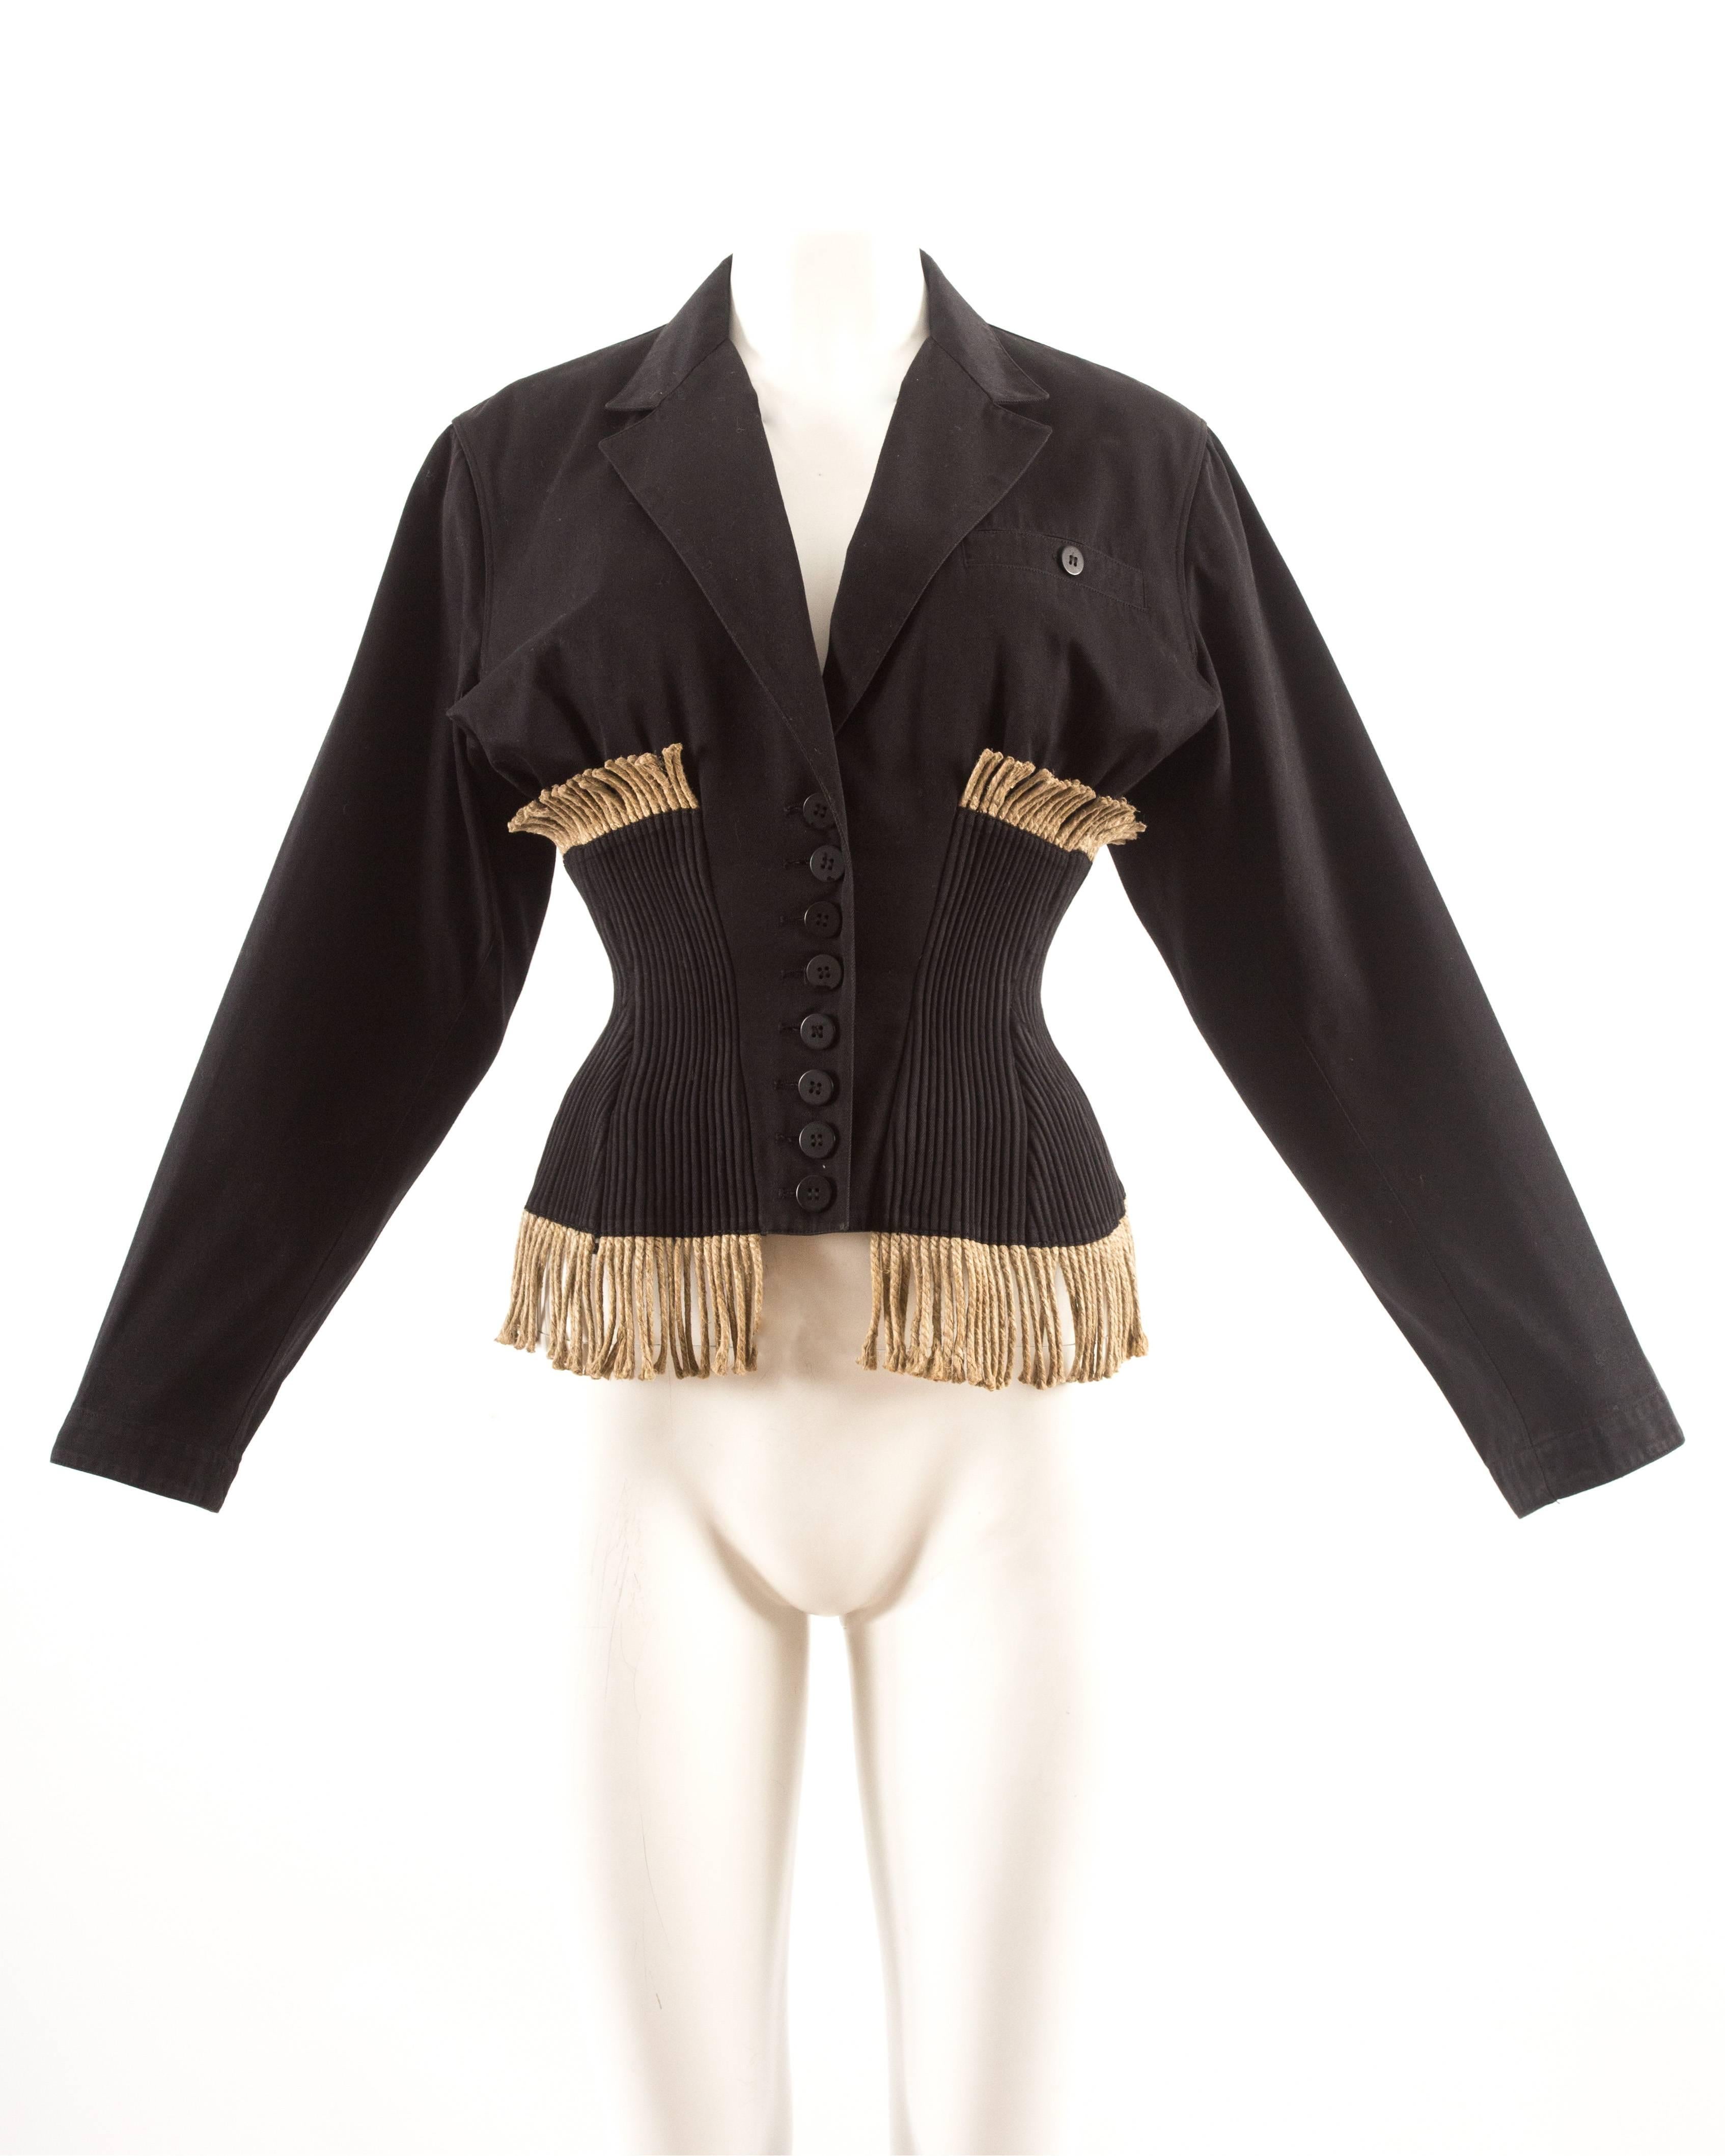 Alaia Spring-Summer 1988 corset-jacket with rope fringe 
